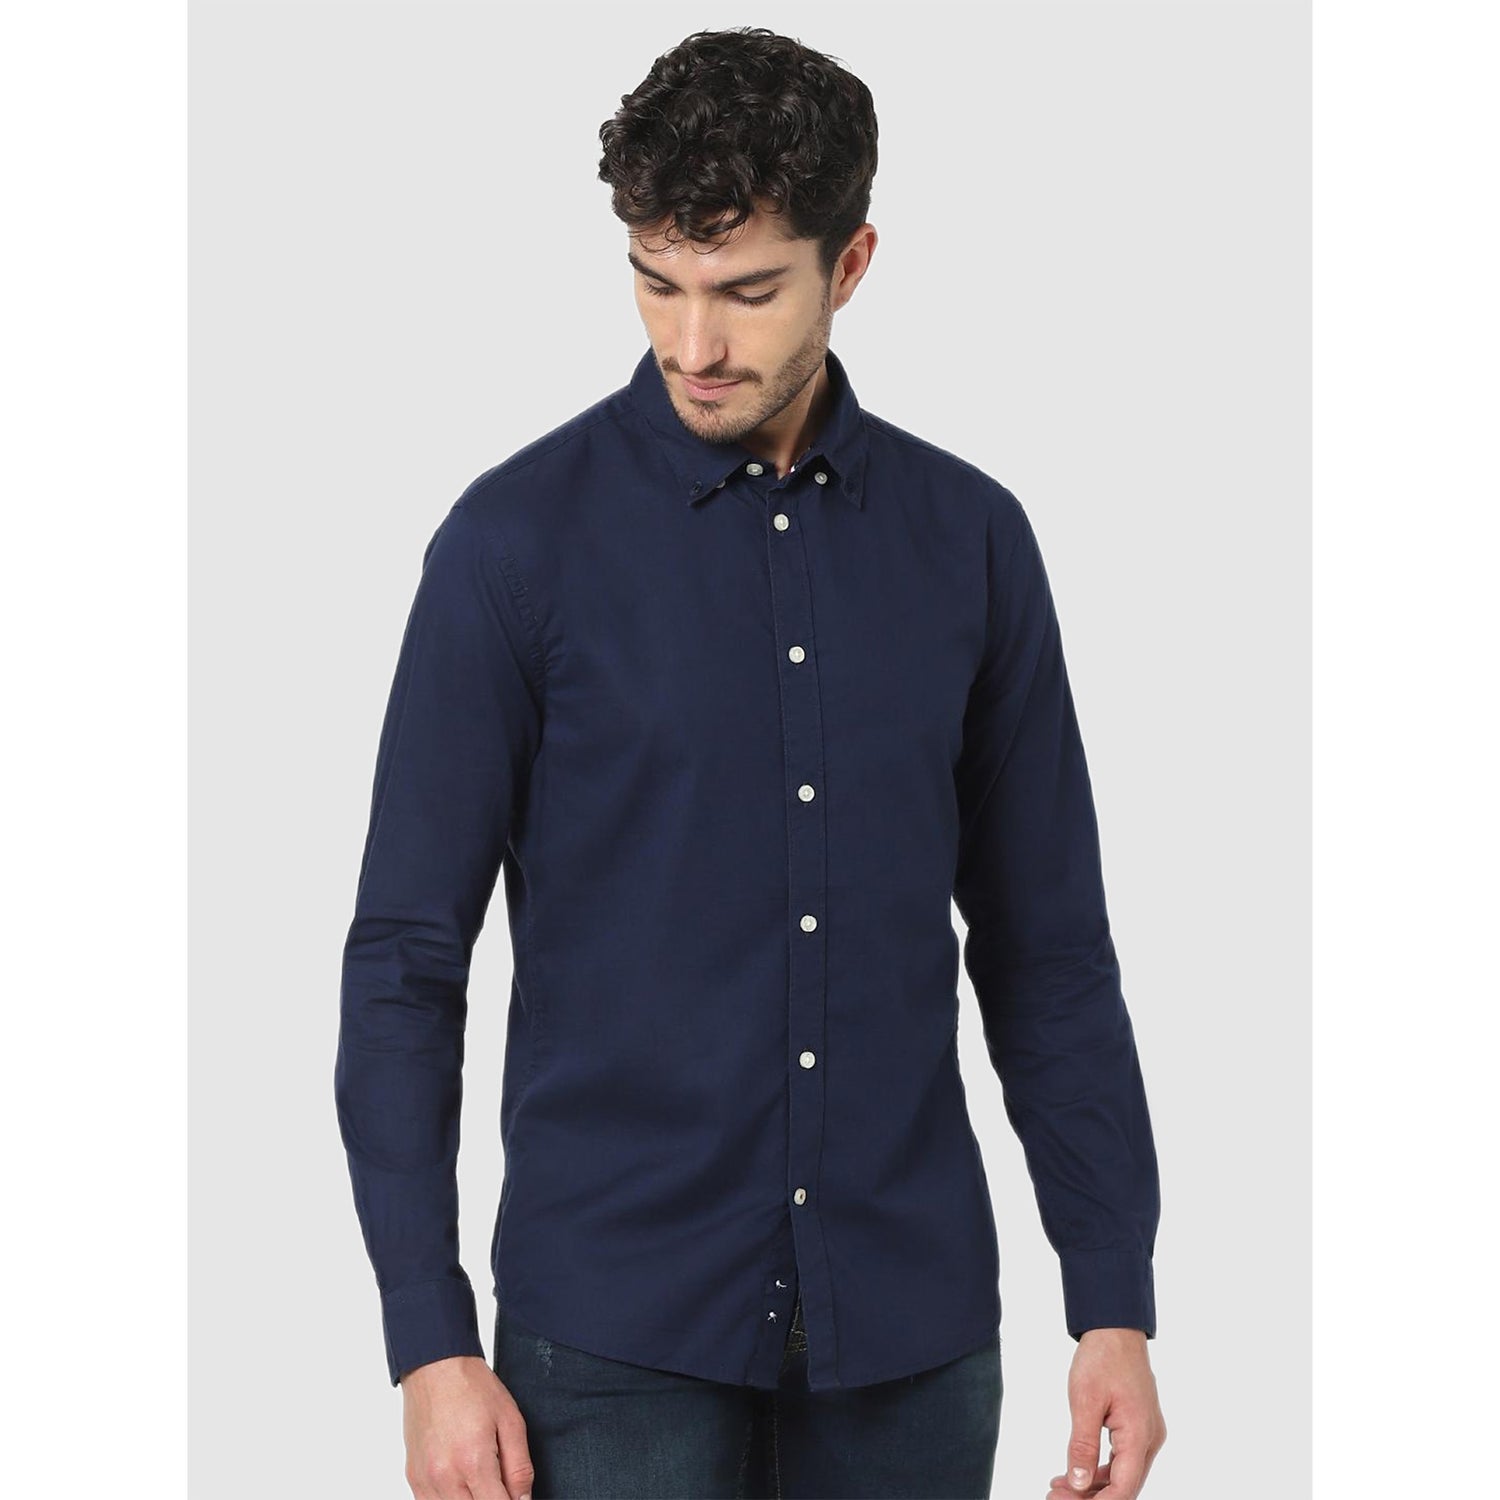 Men's Navy Blue Solid Shirt (Various Sizes)